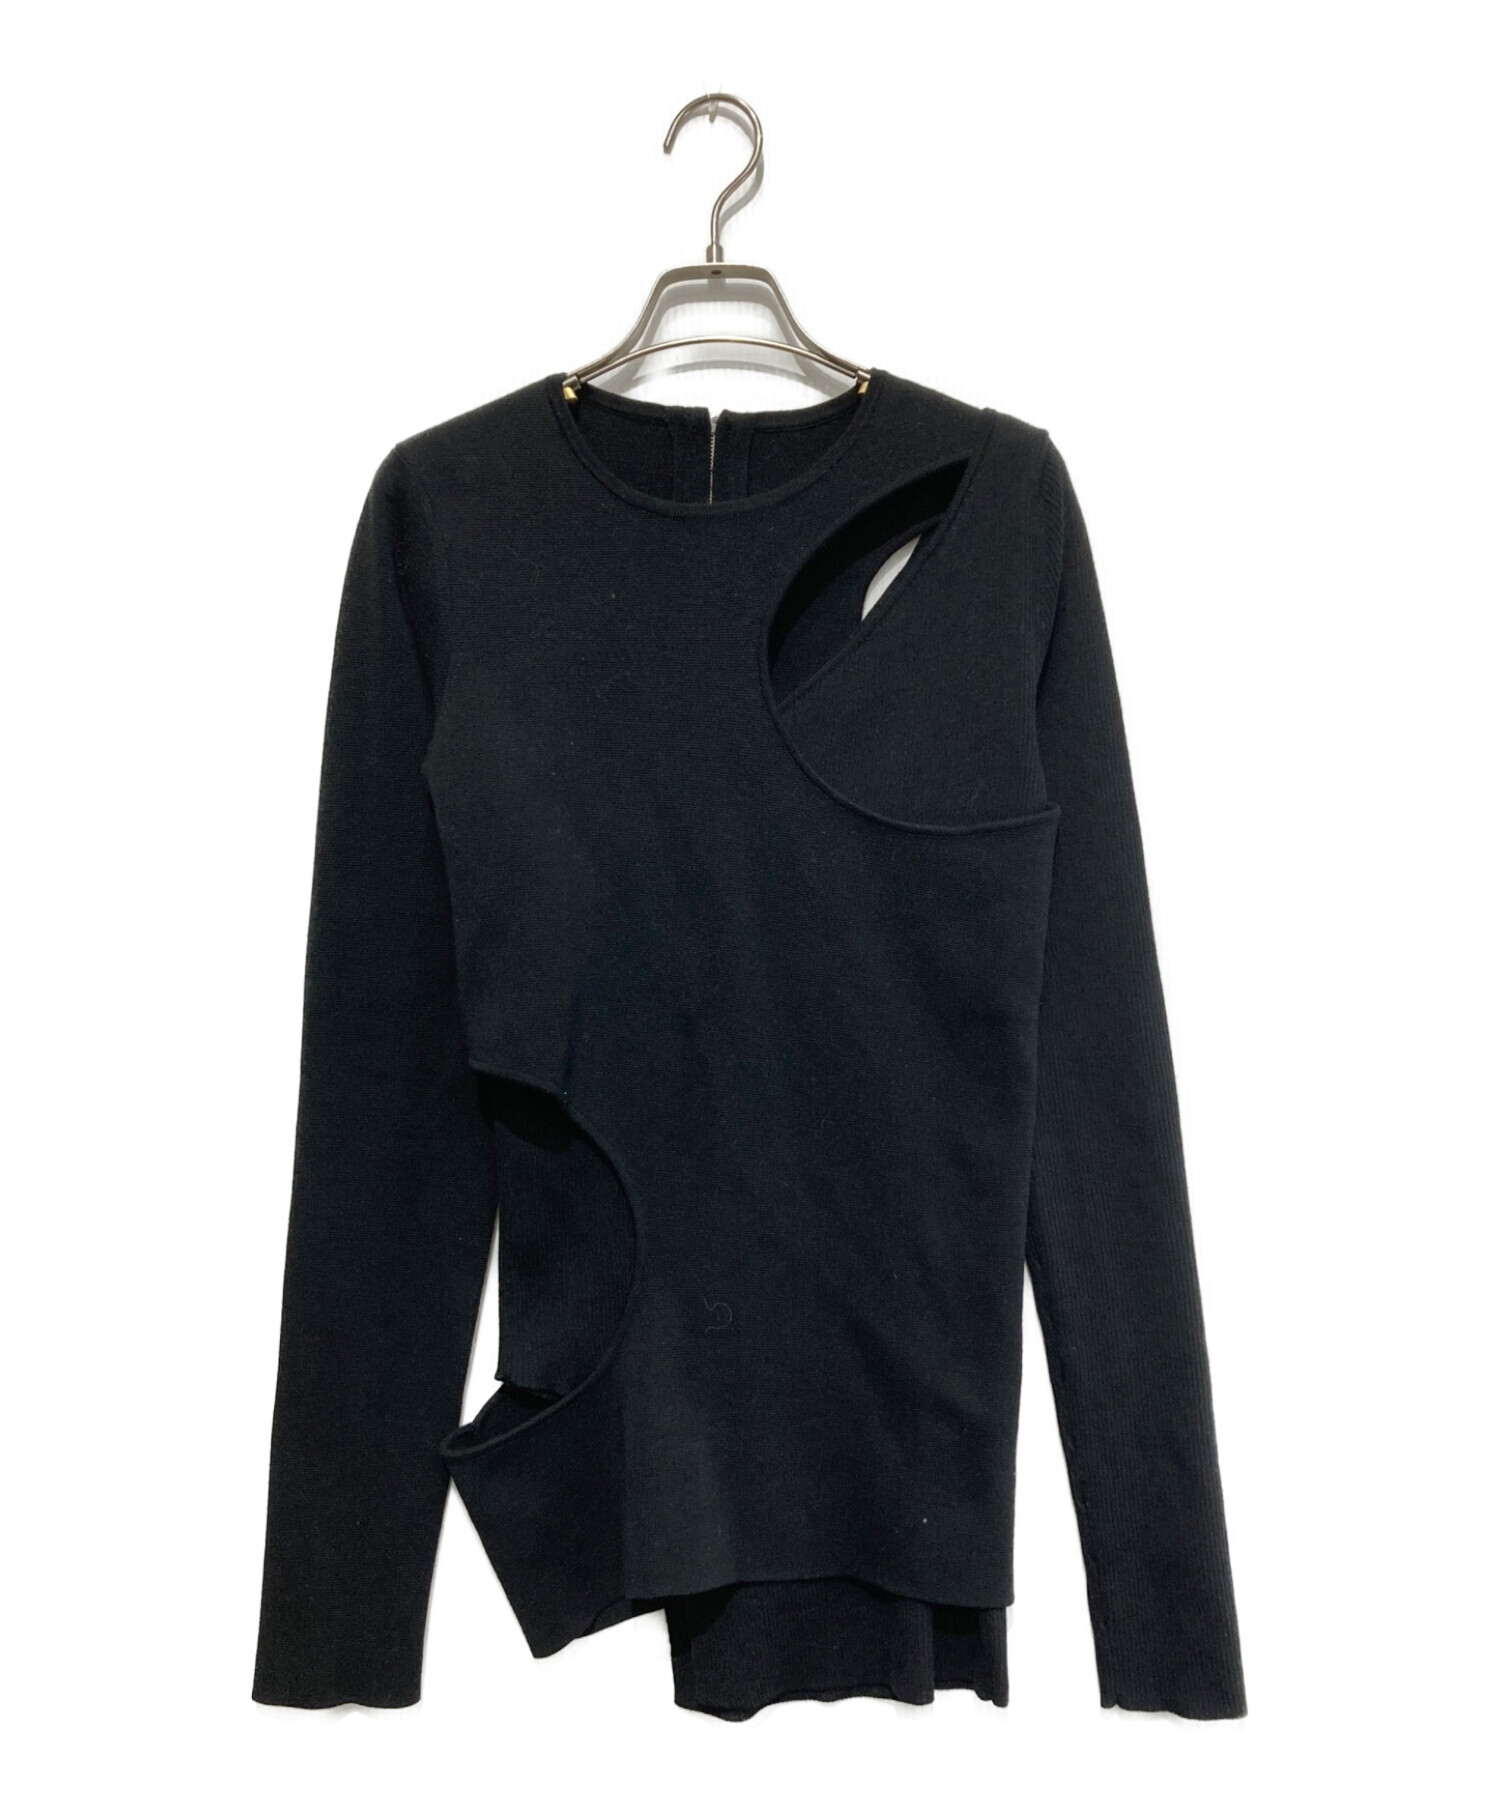 IRENE (アイレネ) Cut Out Detail Knit tops ブラック サイズ:SIZE 36